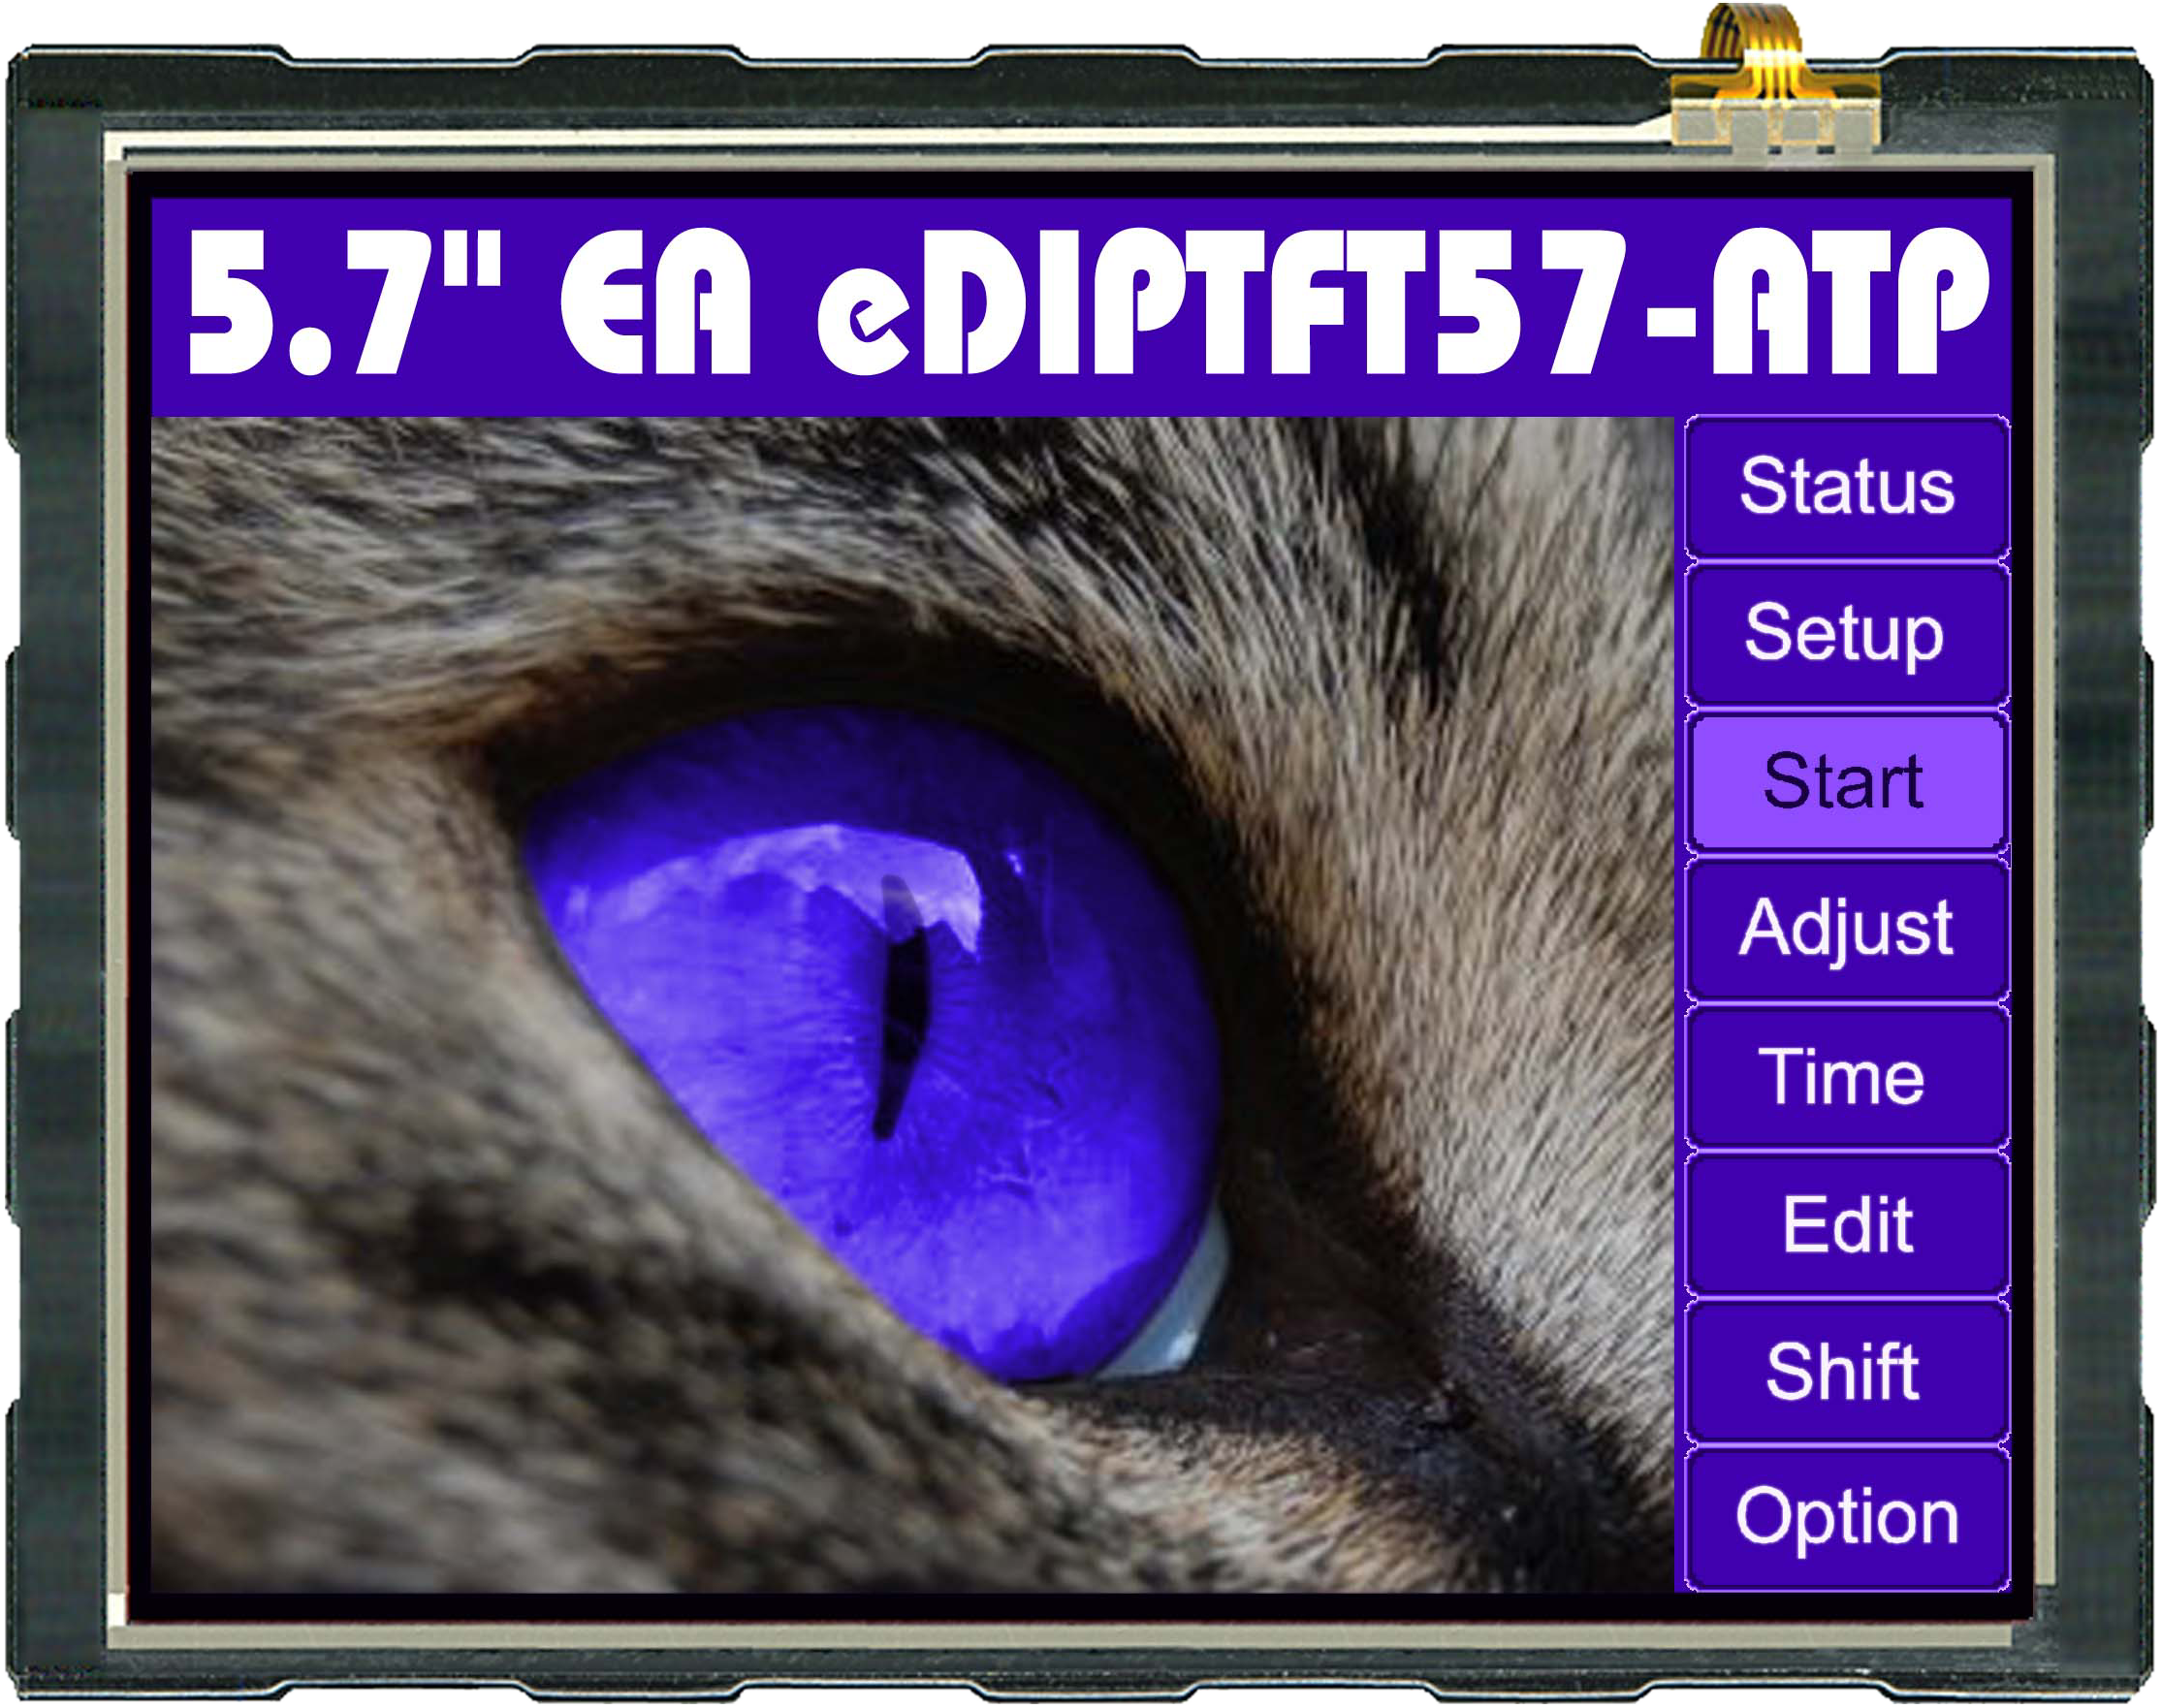 5.7" eDIPTFT Intelligent Graphic Display EA EDIPTFT57-A